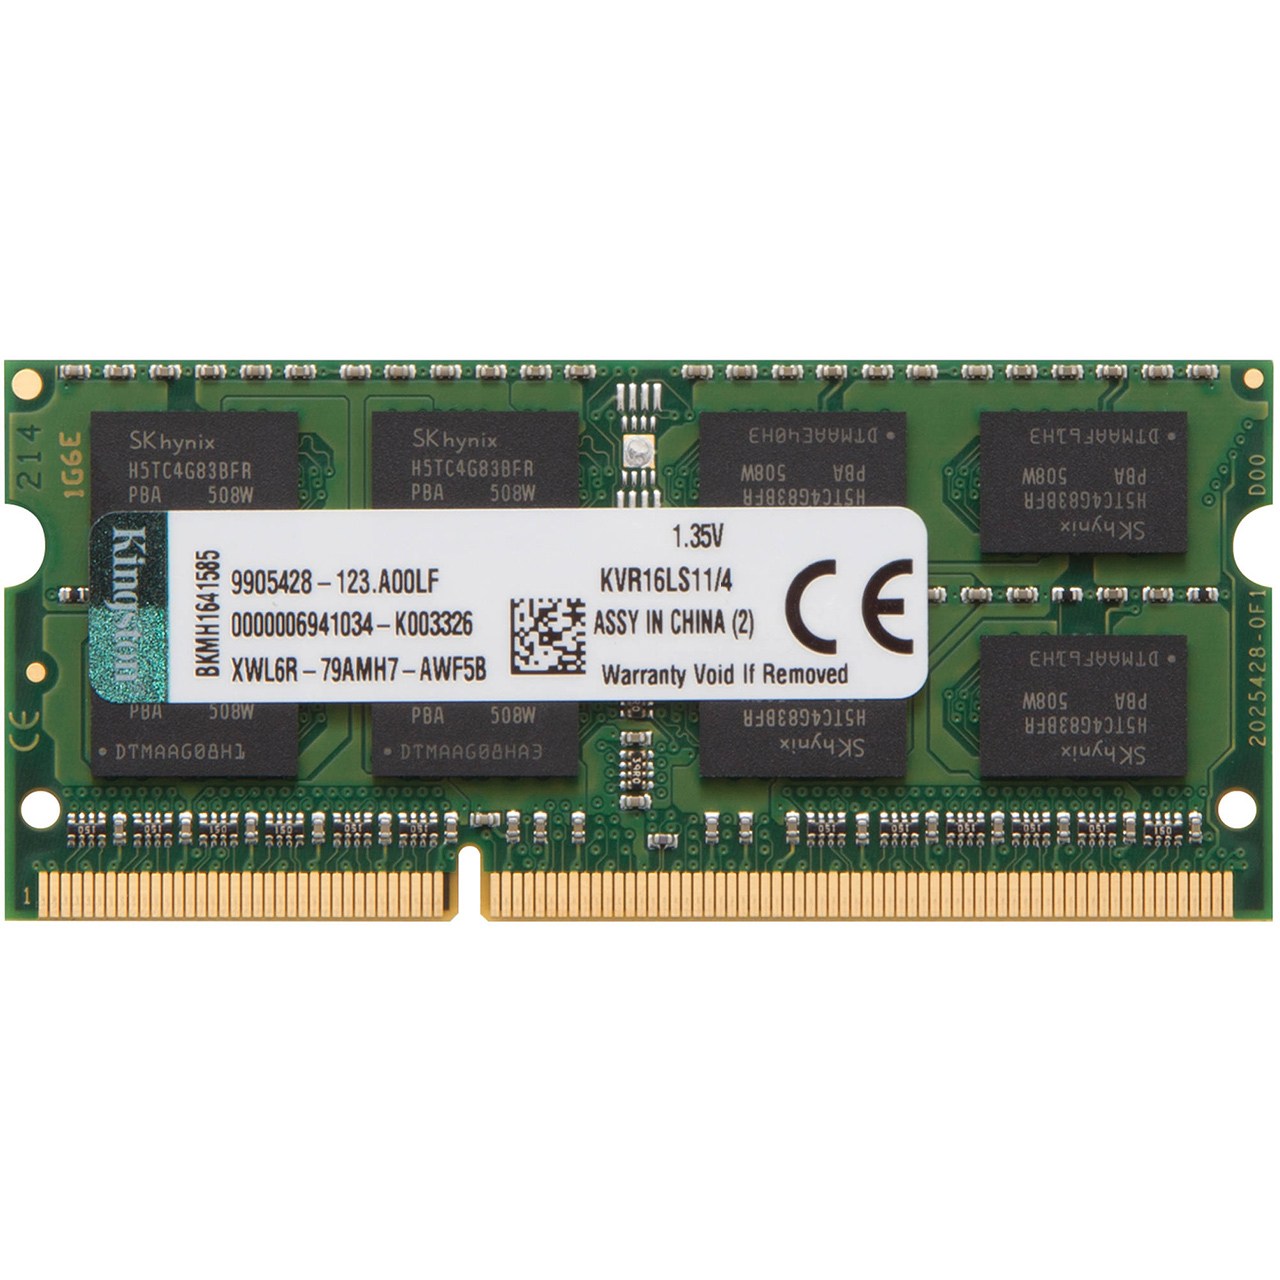 رم لپ تاپ DDR3L تک کاناله 1600 مگاهرتز CL11 مدل ValueRAM ظرفیت 4 گیگابایت